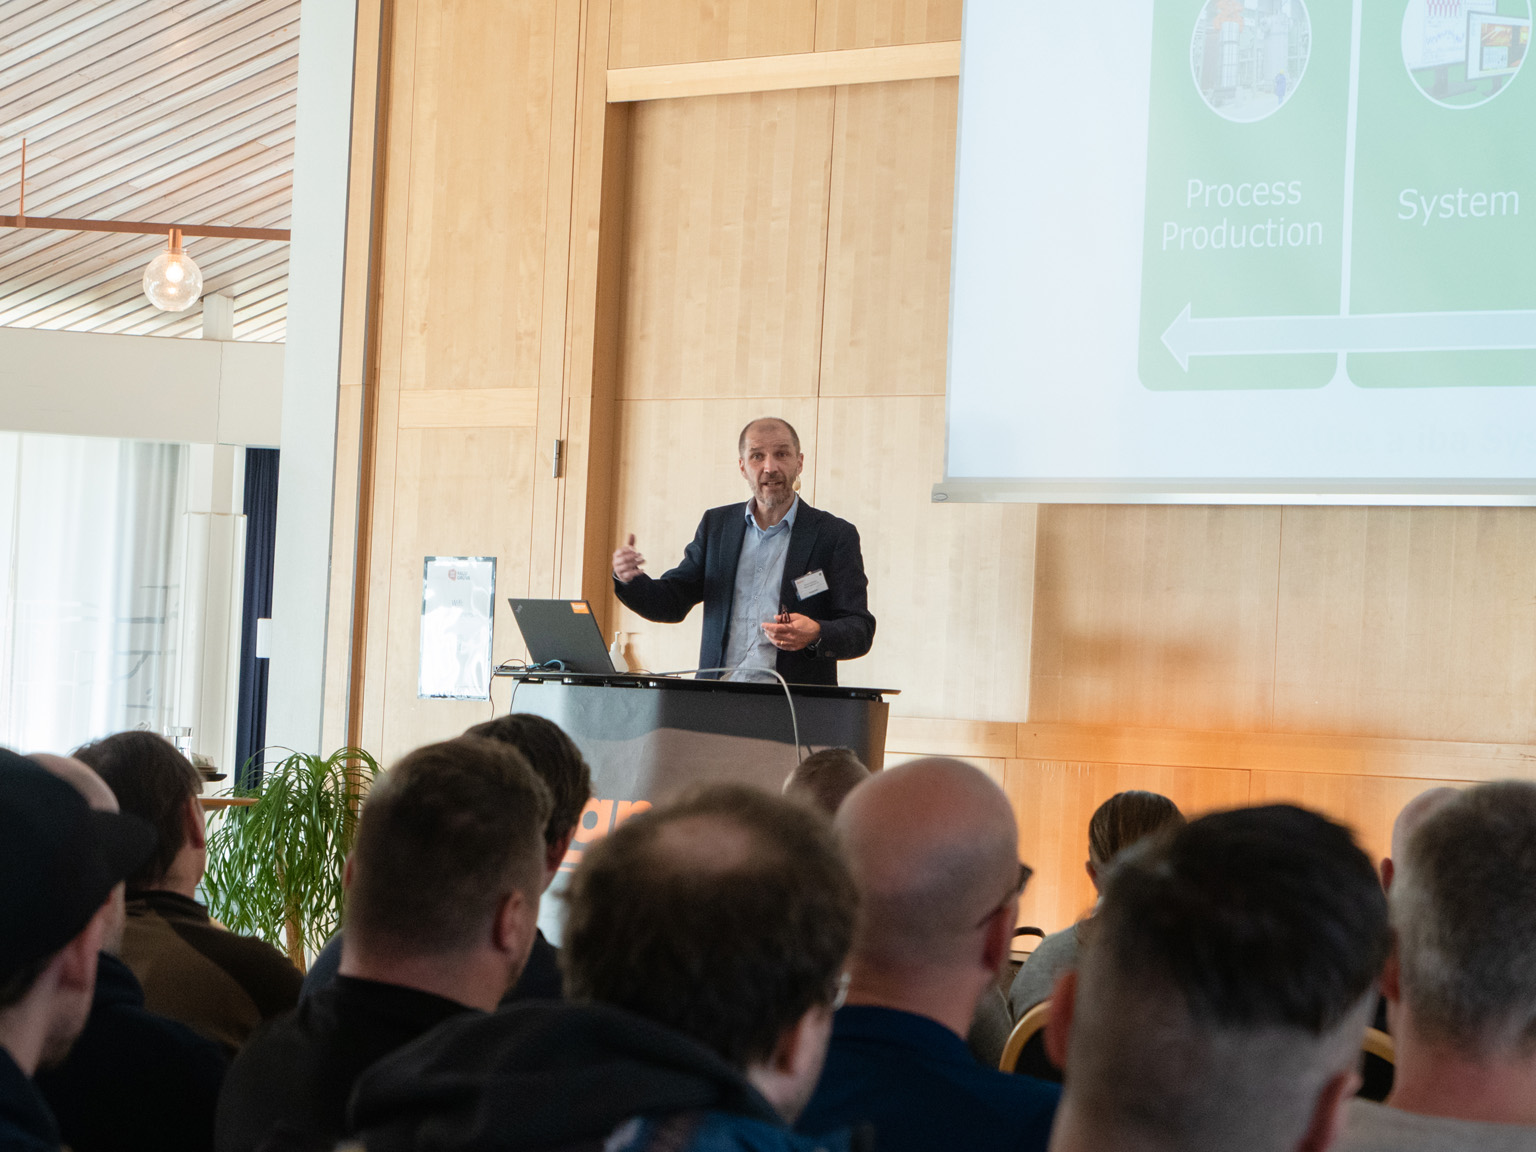 Patrik Fredriksson presenting at the iba-day